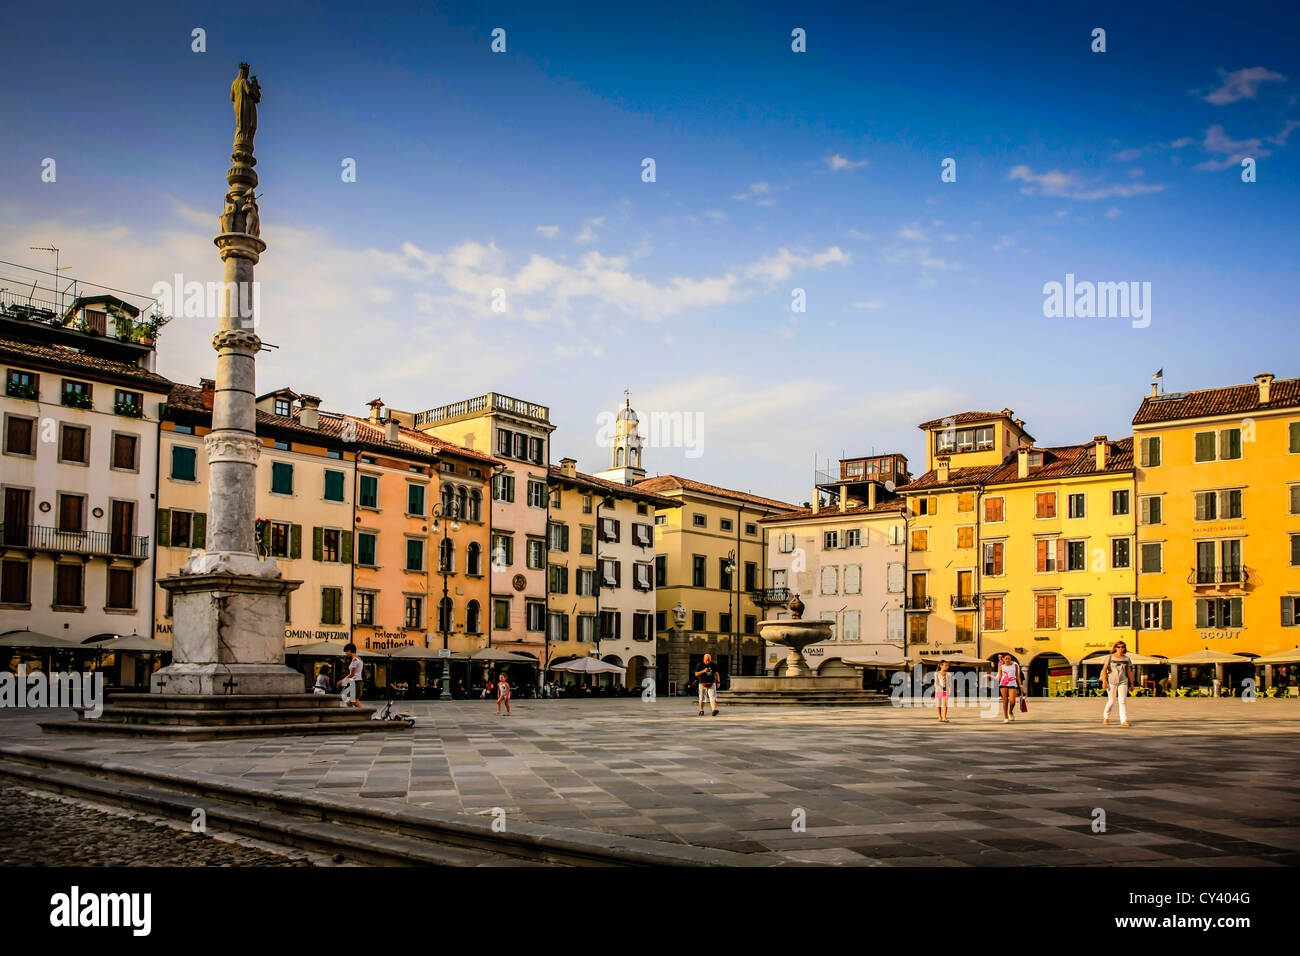 Piazza San Giacomo in Udine, Italy Stock Photo